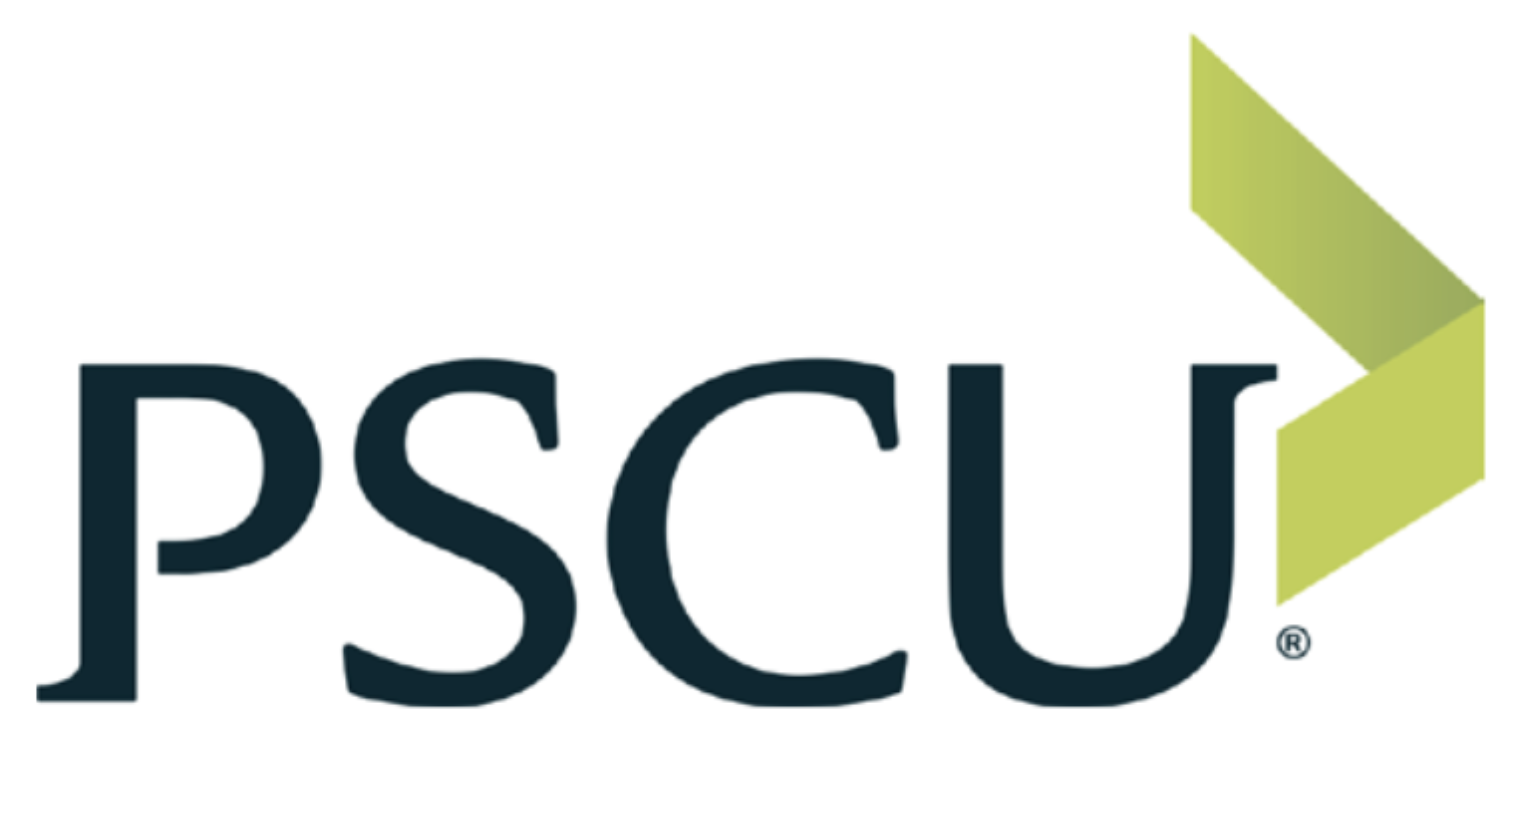 a logo for PSCU